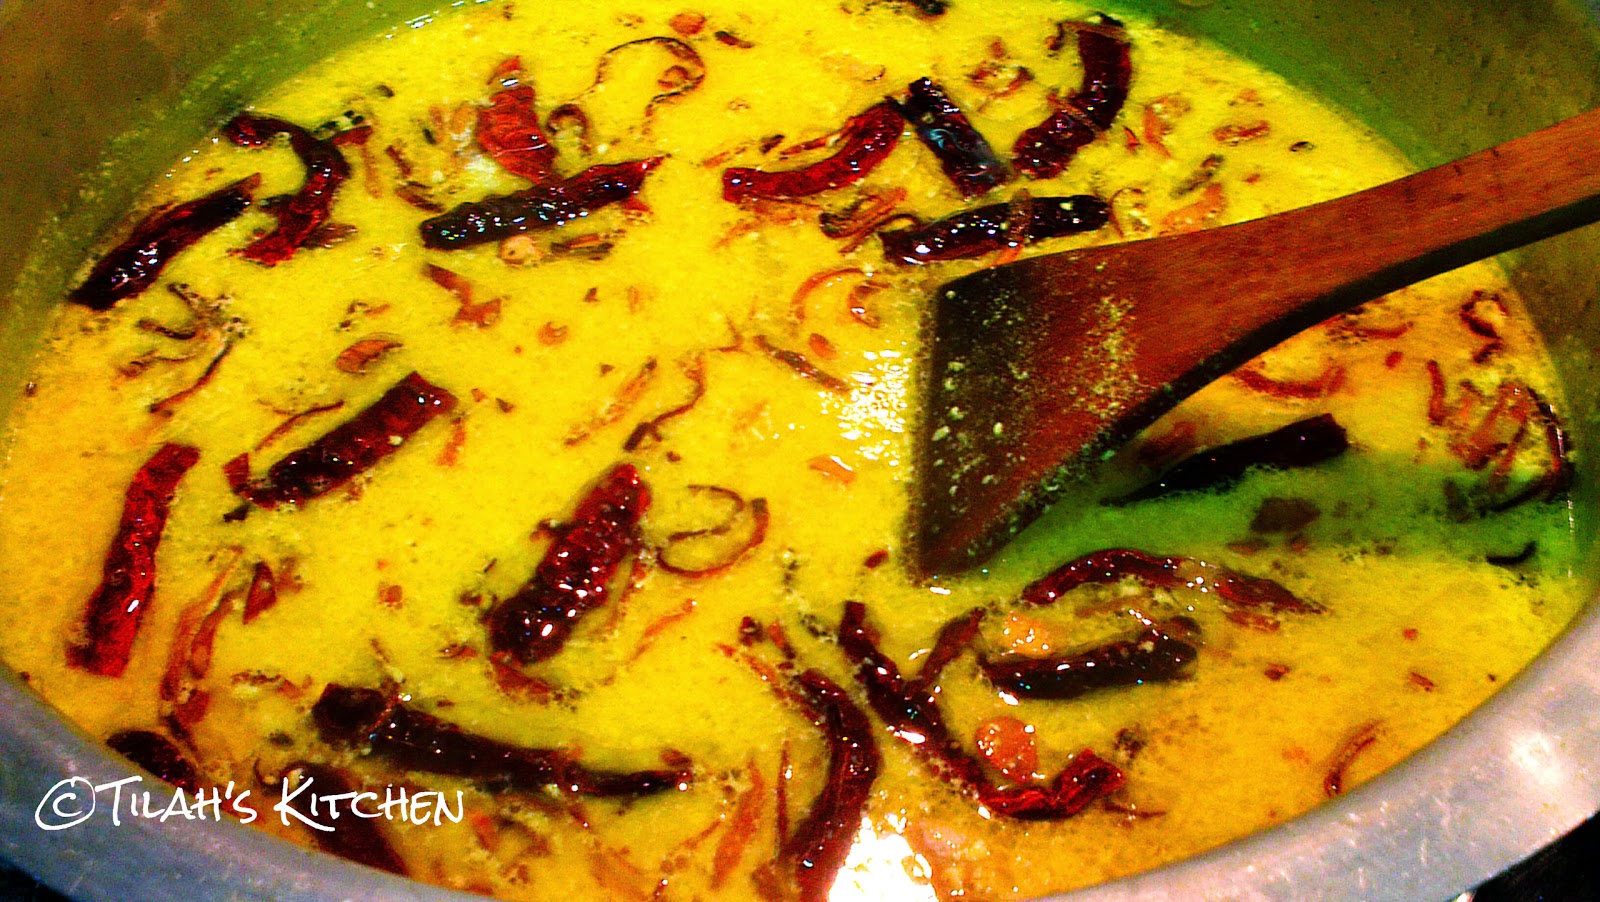 Braised Egg In Toor Dal Telur Masak Lemak Dal Stir Fried Chilli Paste With Anchovies Sambal Tumis Ikan Bilis